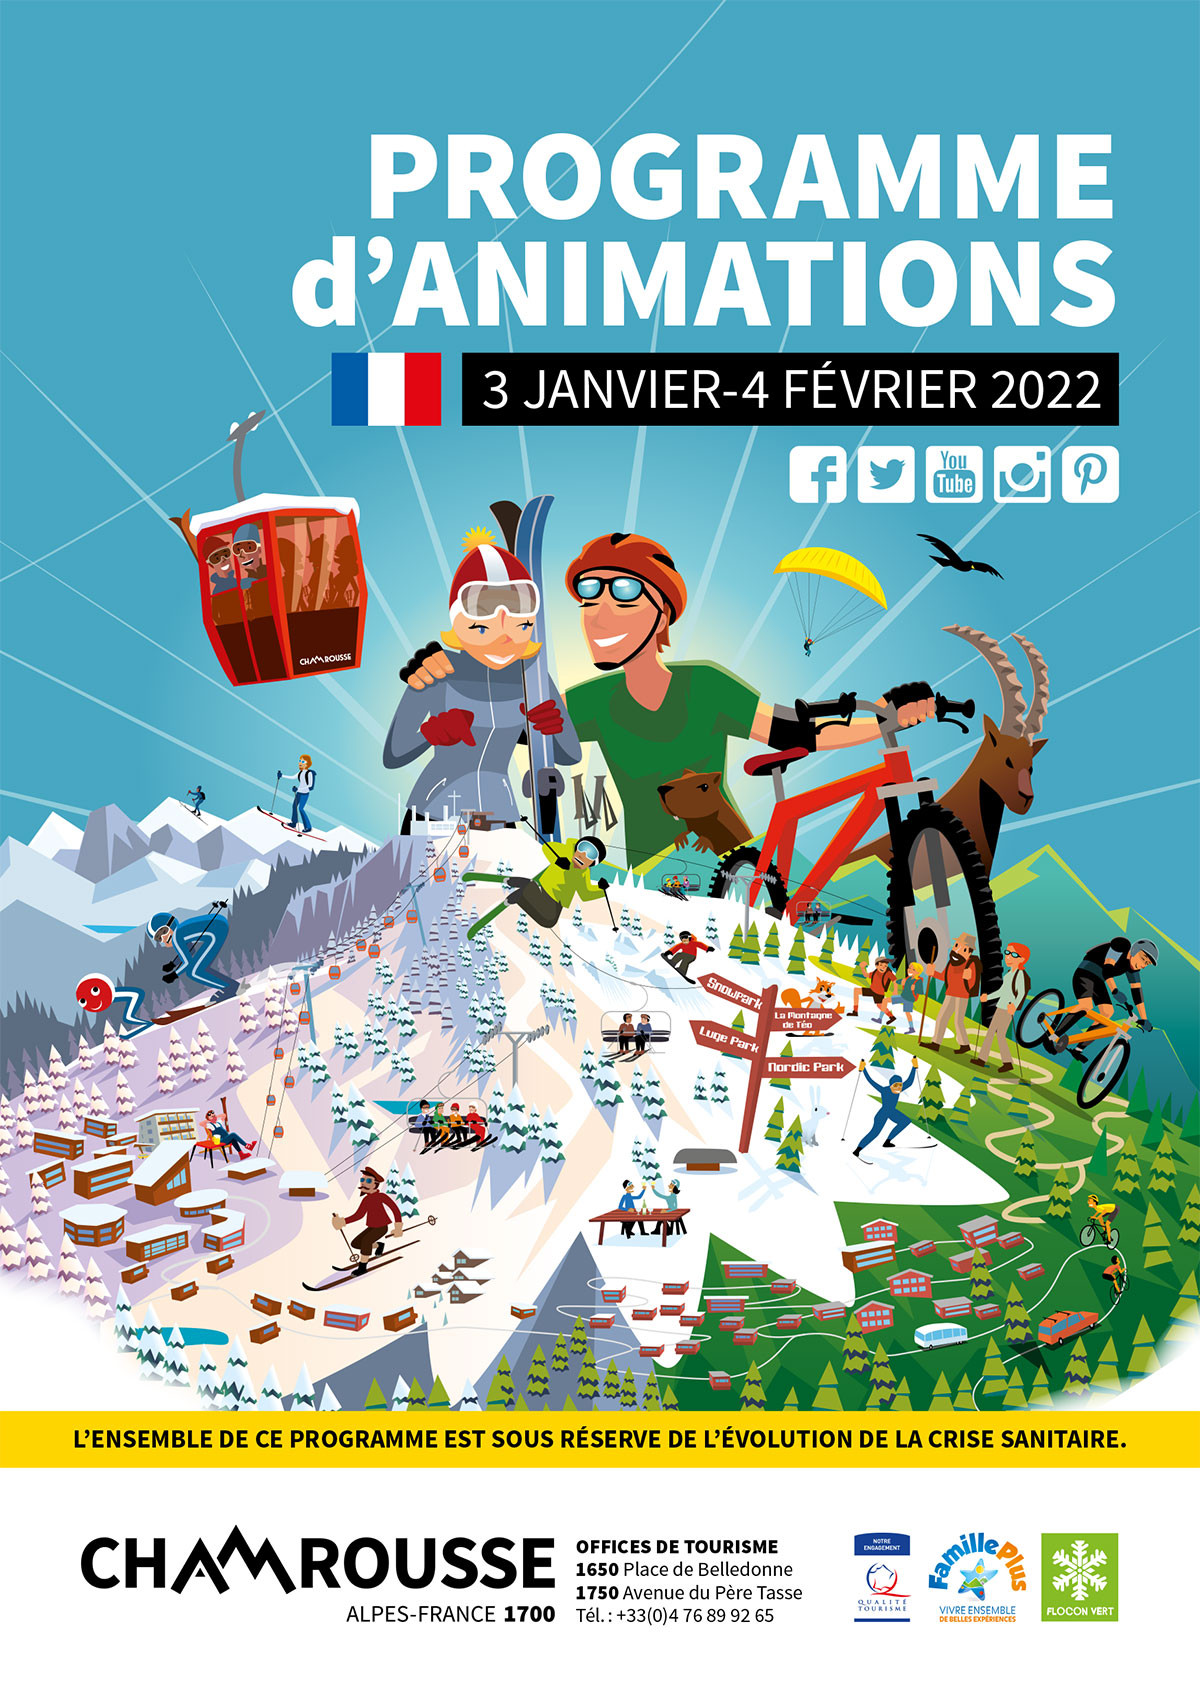 Chamrousse programme animation événement janvier 2022 station ski montagne isère alpes france